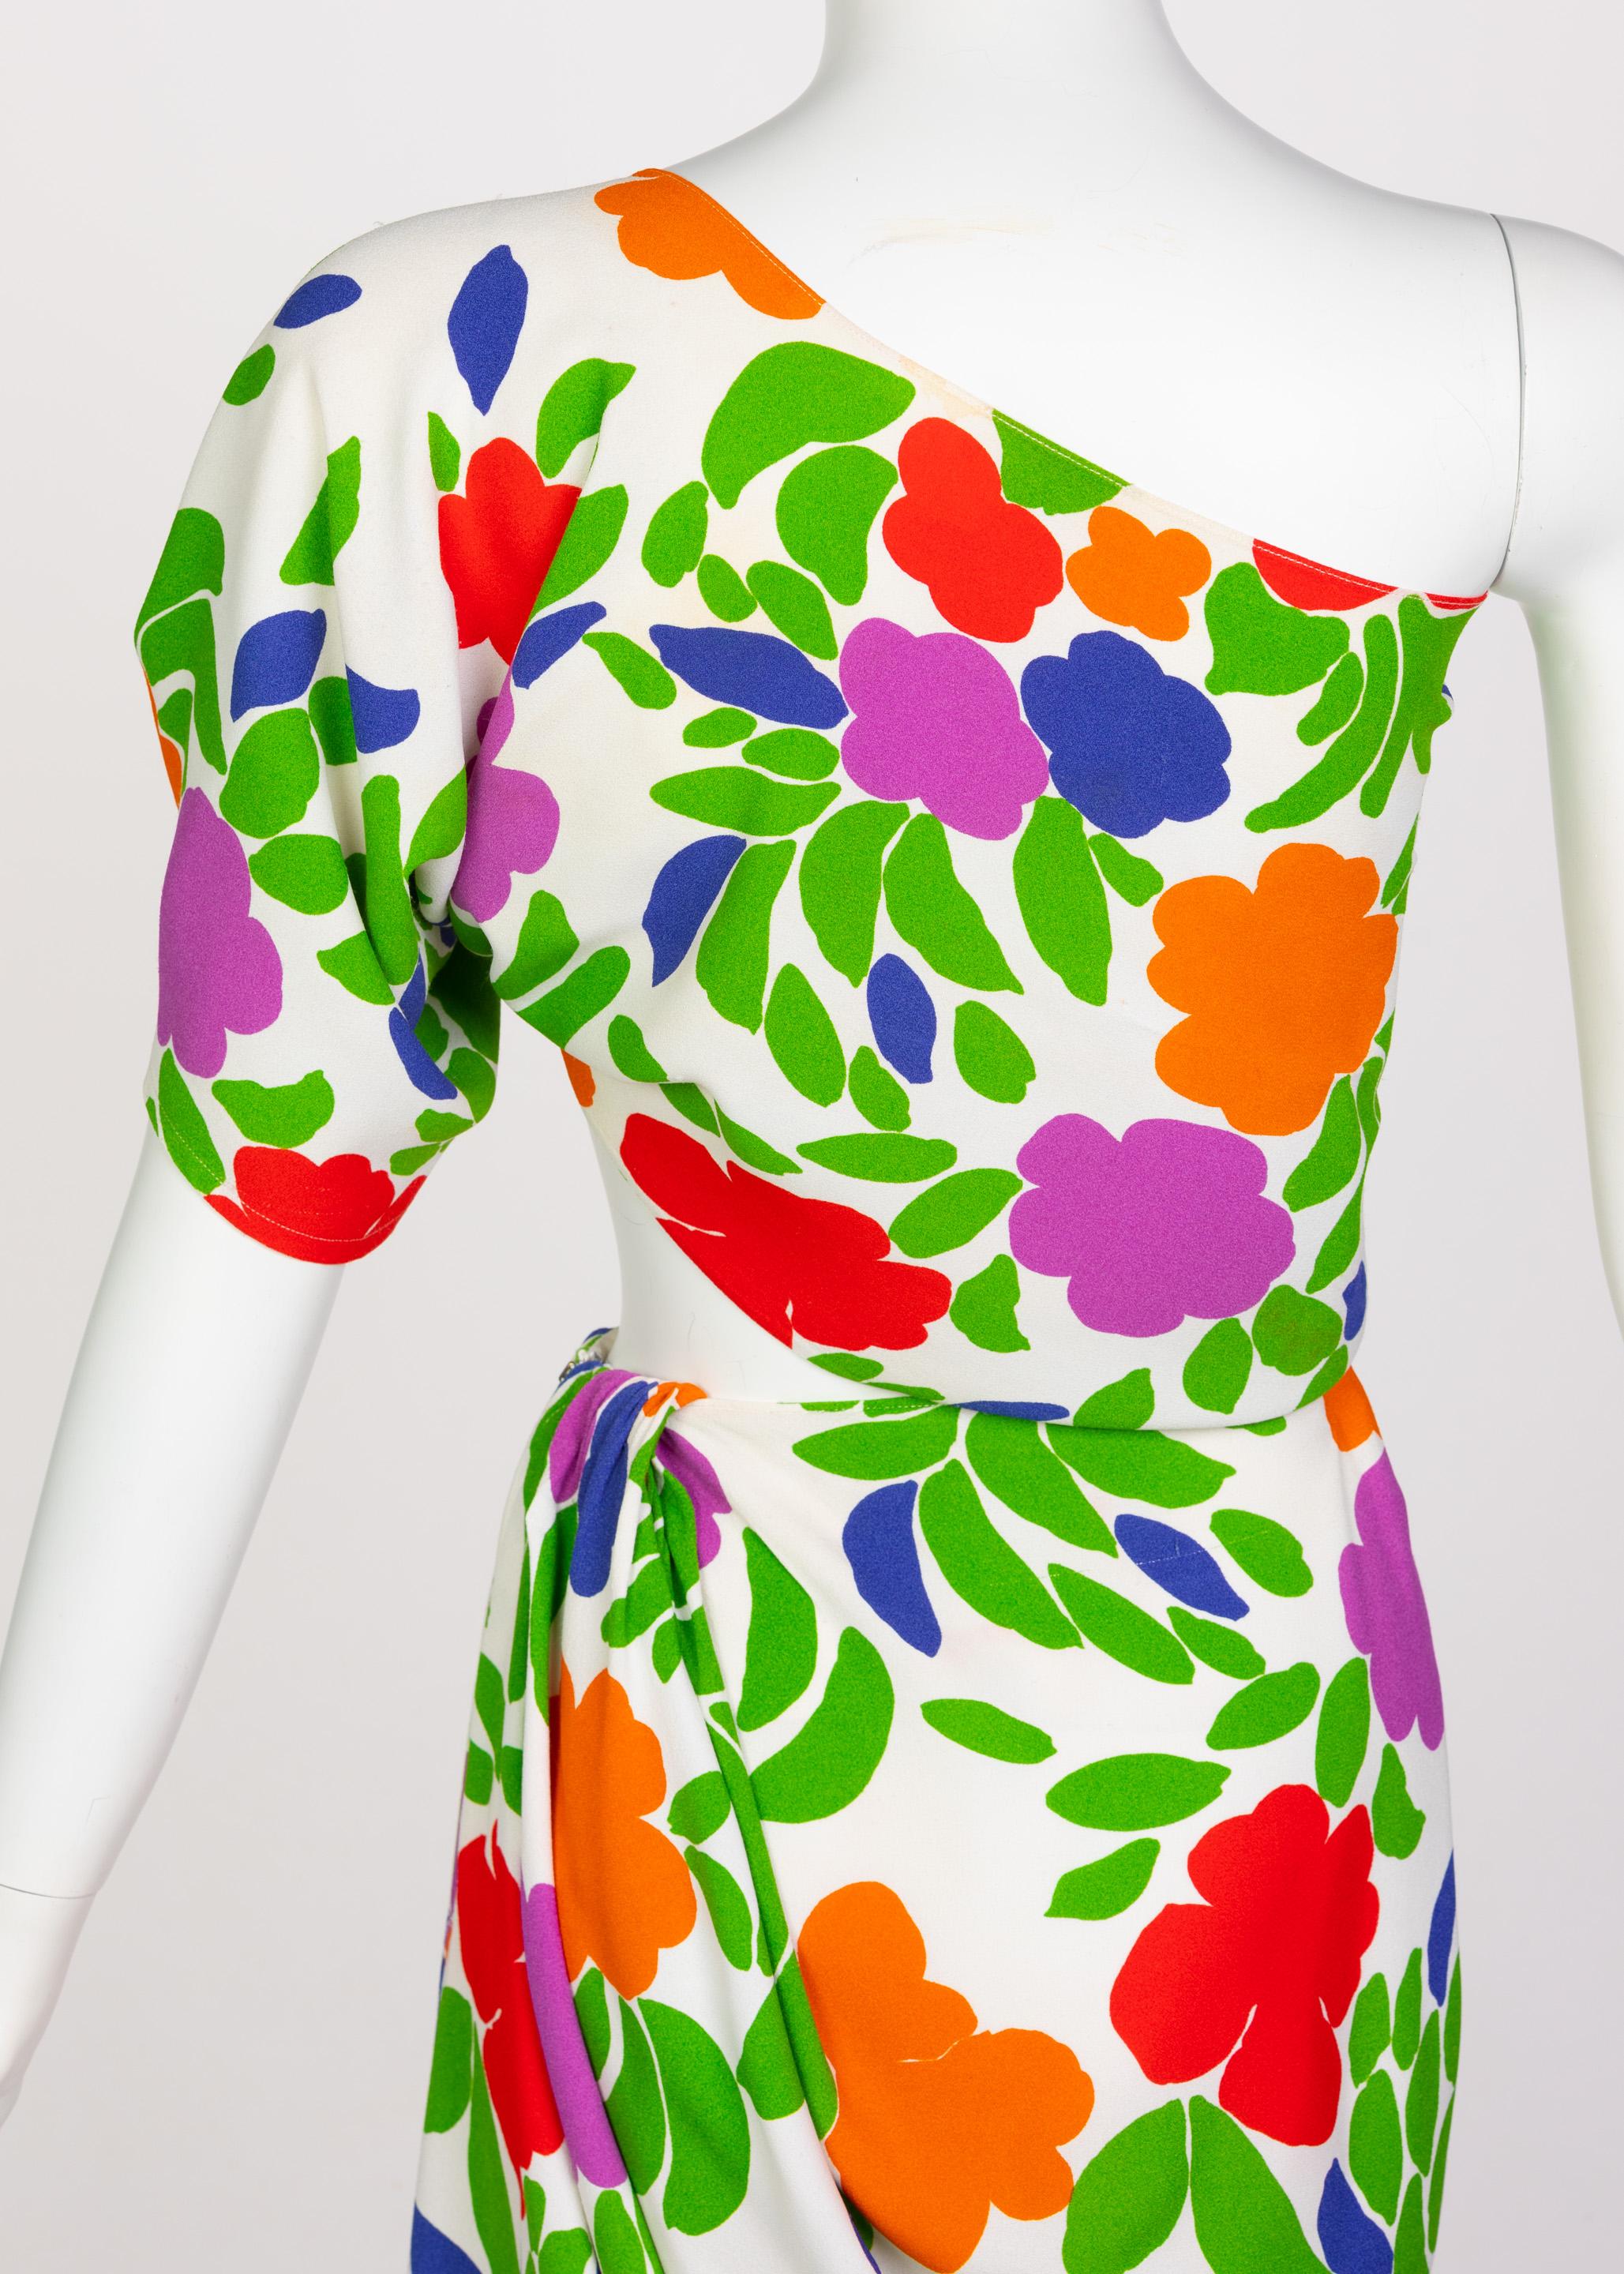 Yves Saint Laurent Floral Draped One Shoulder Top Skirt Ensemble YSL, 1970s 5